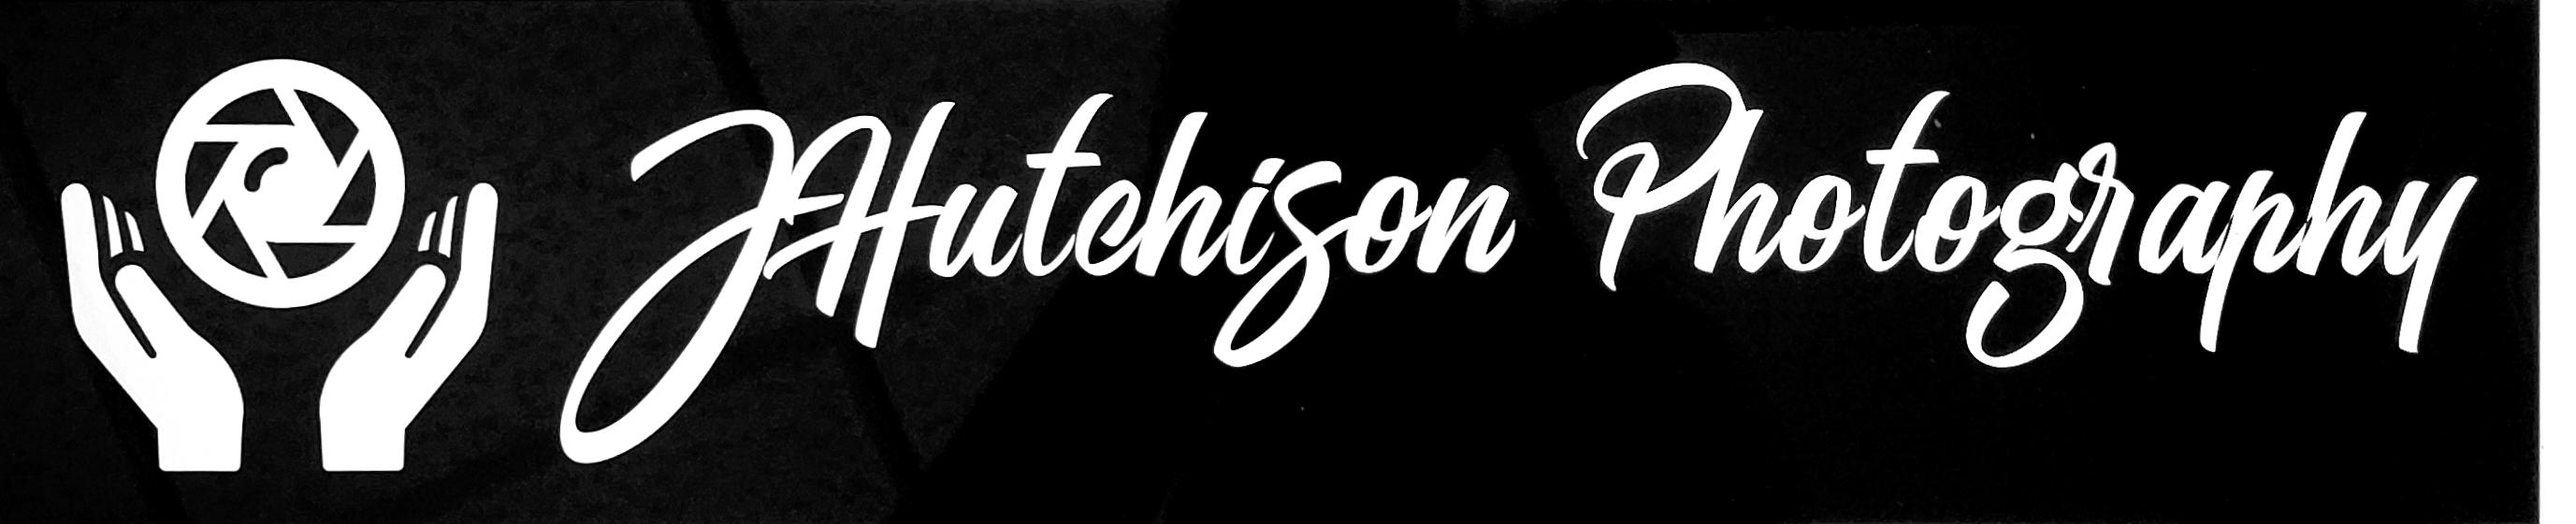 JHutchison Photography